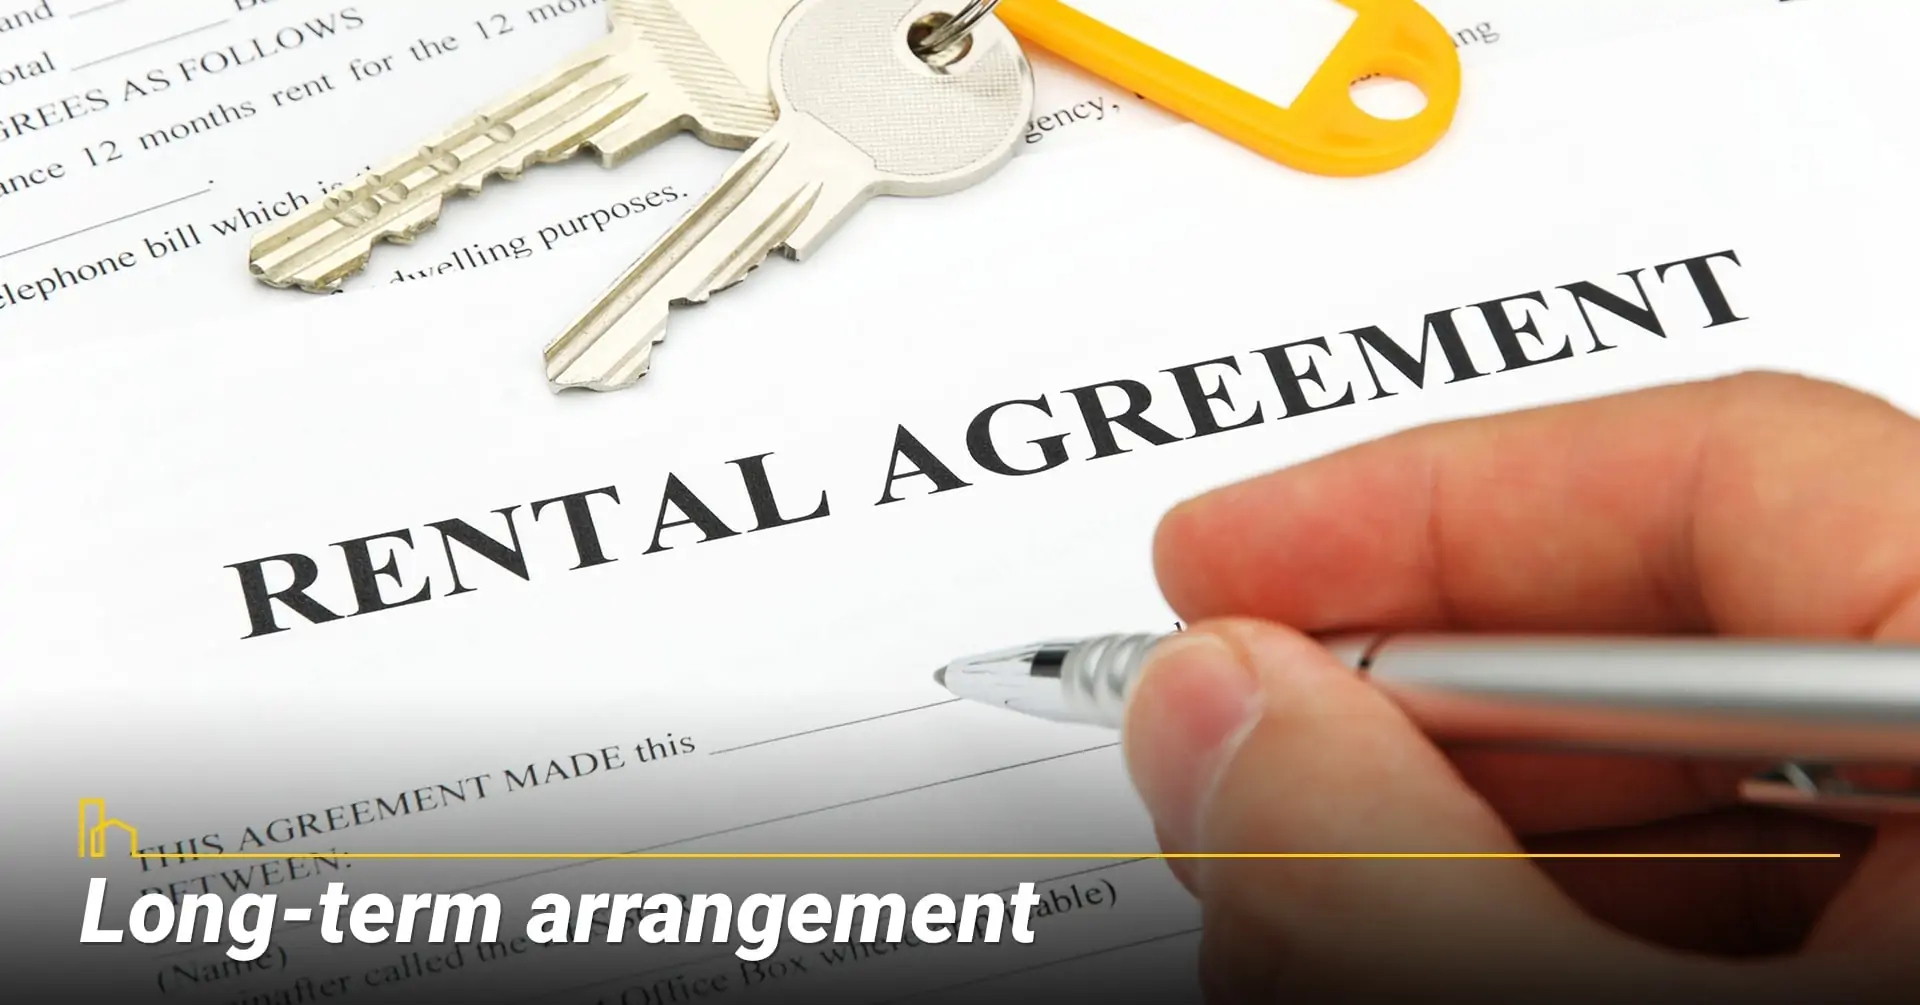 Long-term arrangement, terms of agreement